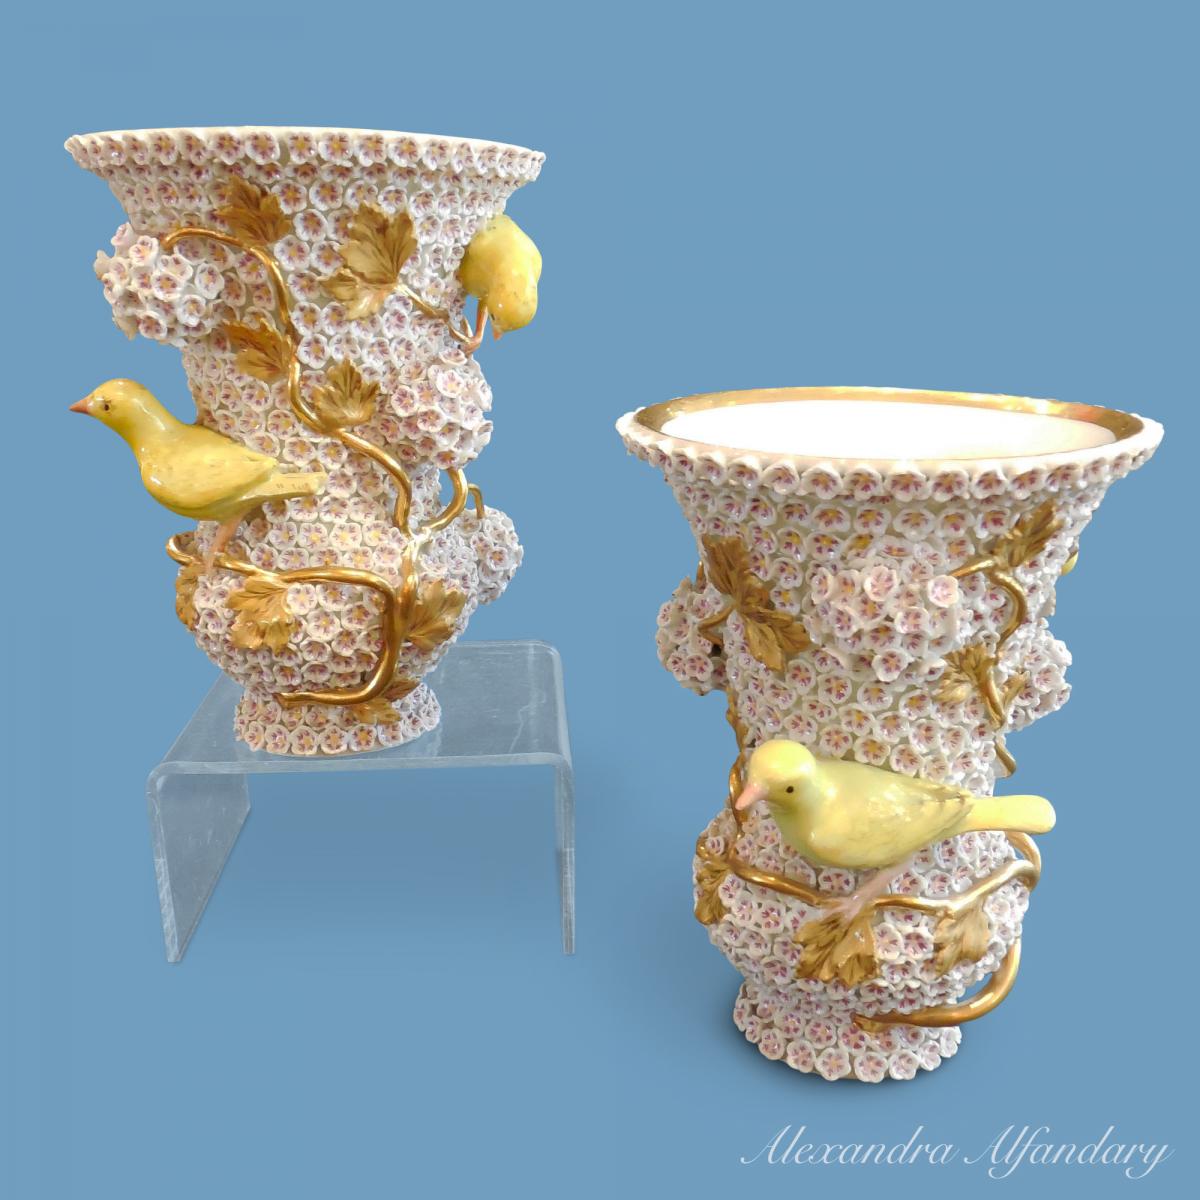 A Pair Of Meissen Campagna Shaped Porcelain Snowball (Schneeball) Vases, circa 1860-70